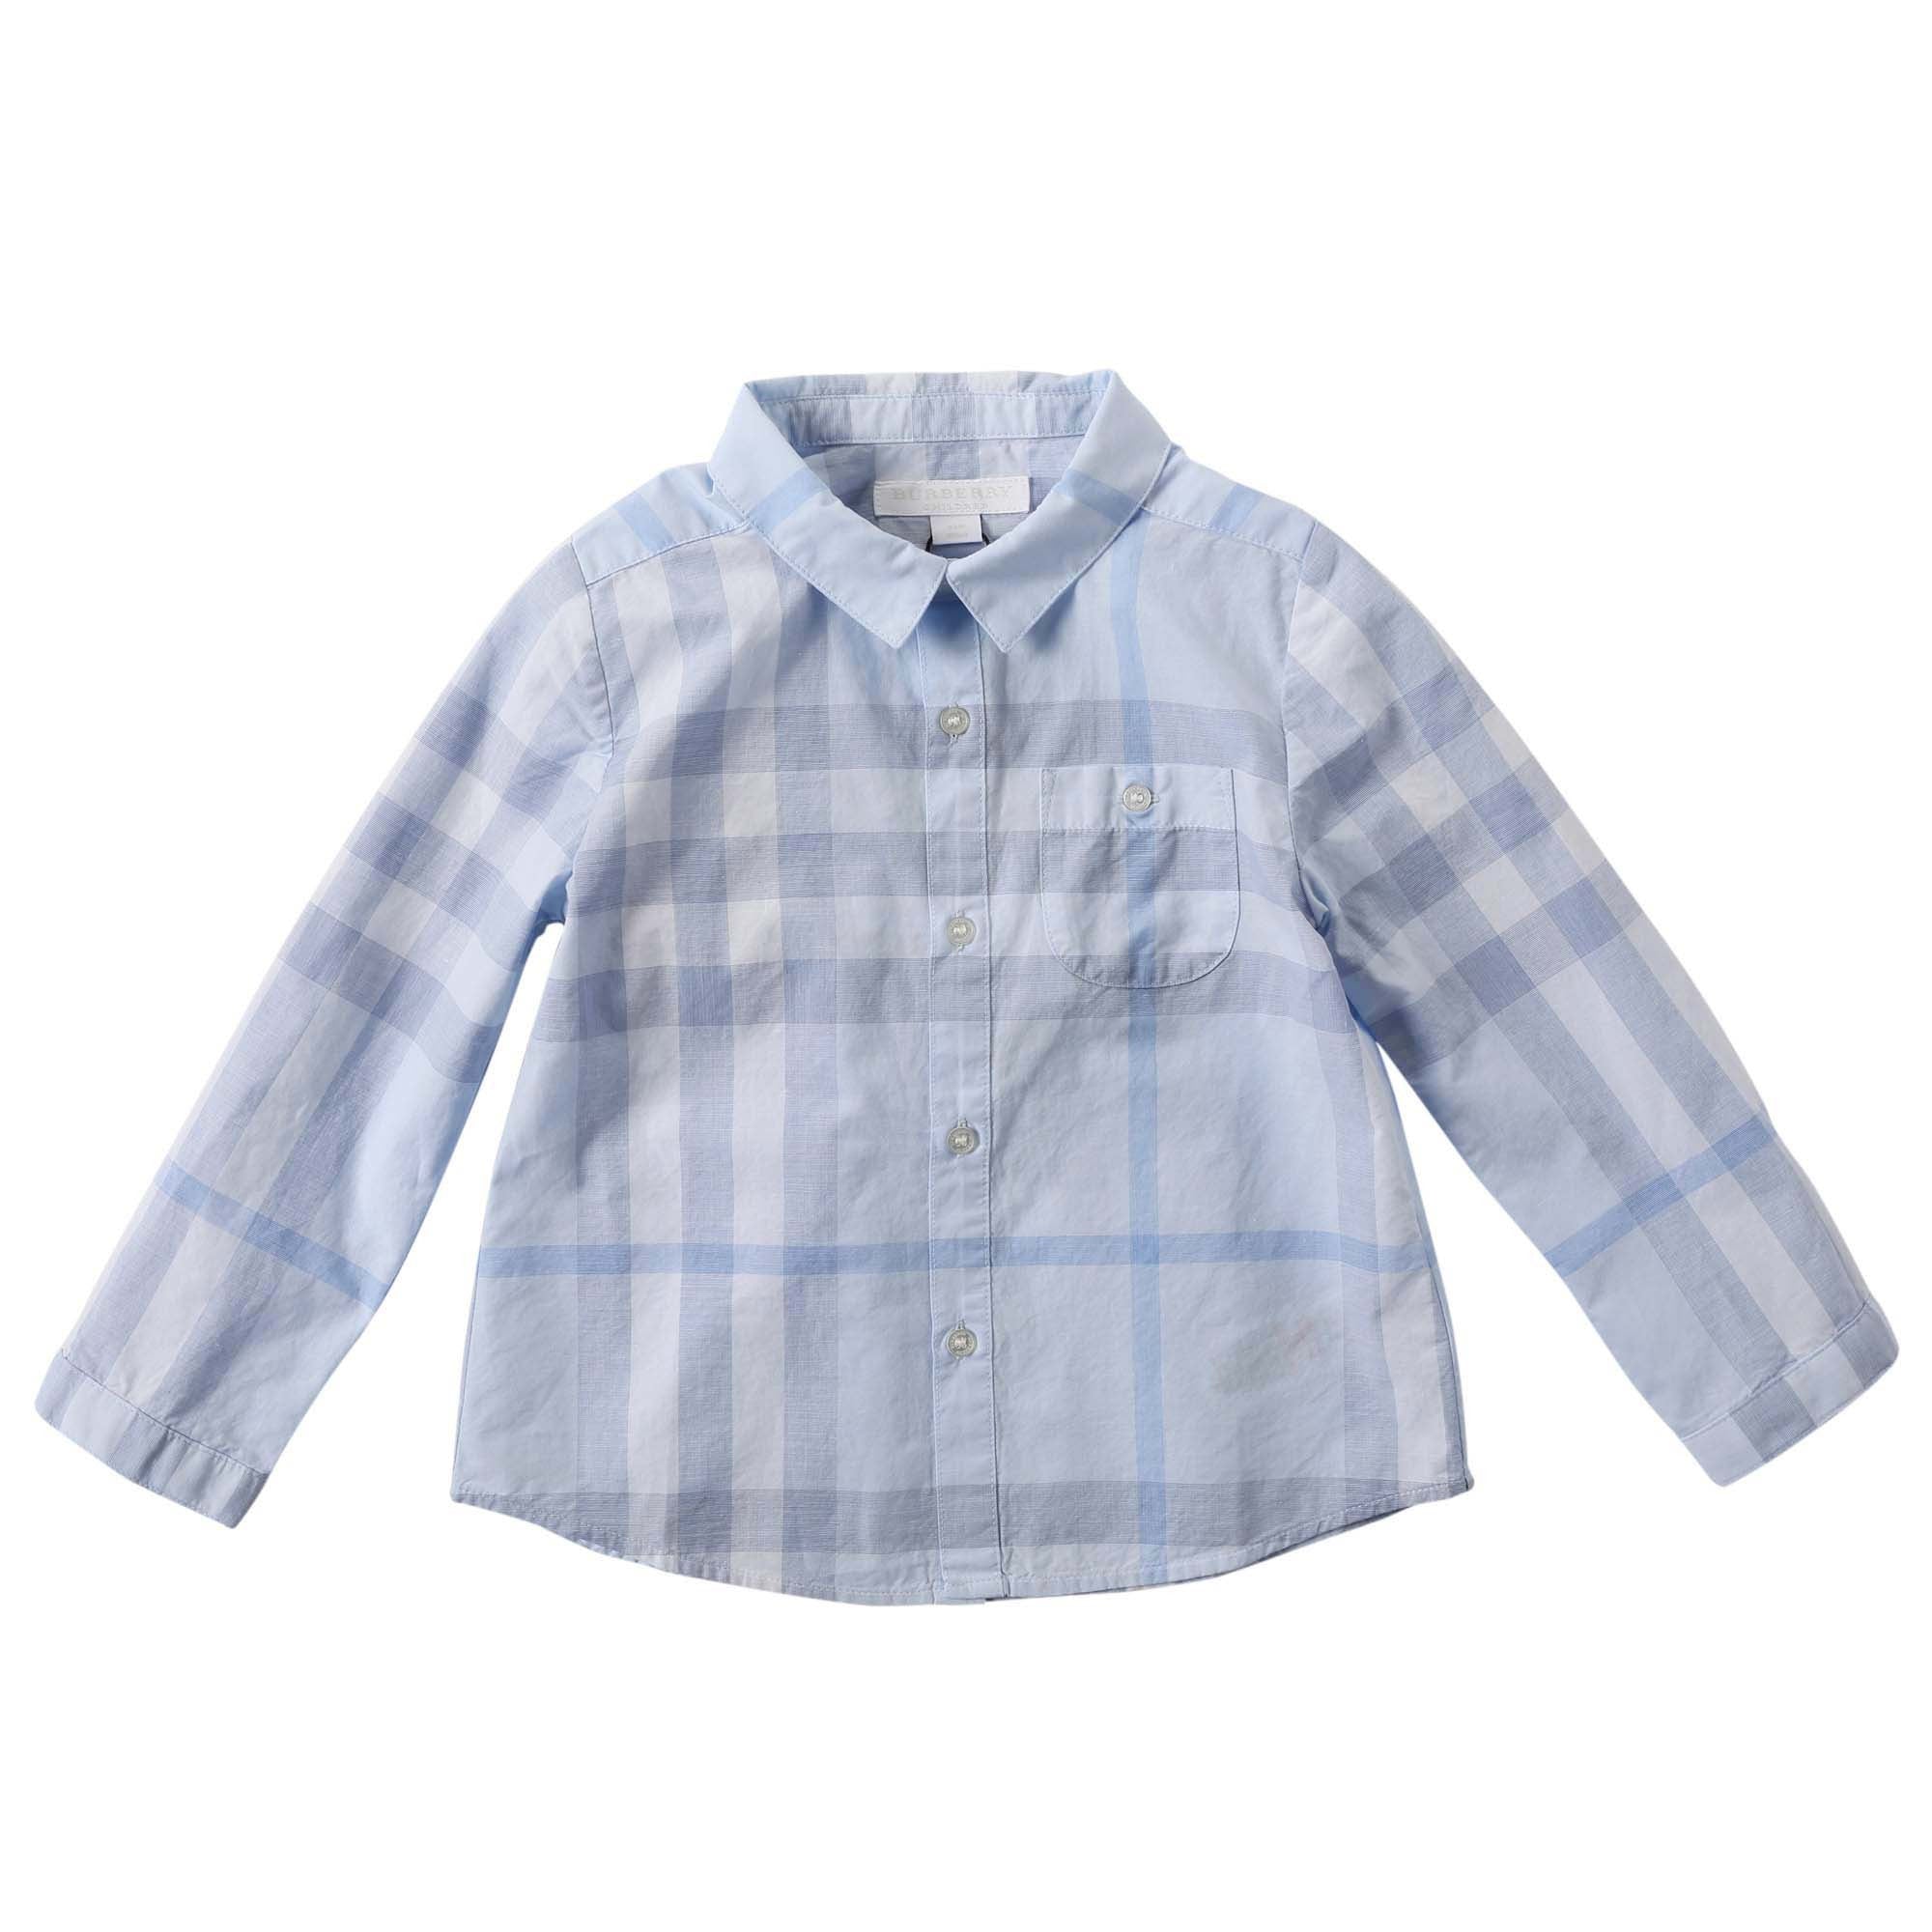 Baby Boys Ice Blue Check Cotton Shirt - CÉMAROSE | Children's Fashion Store - 1